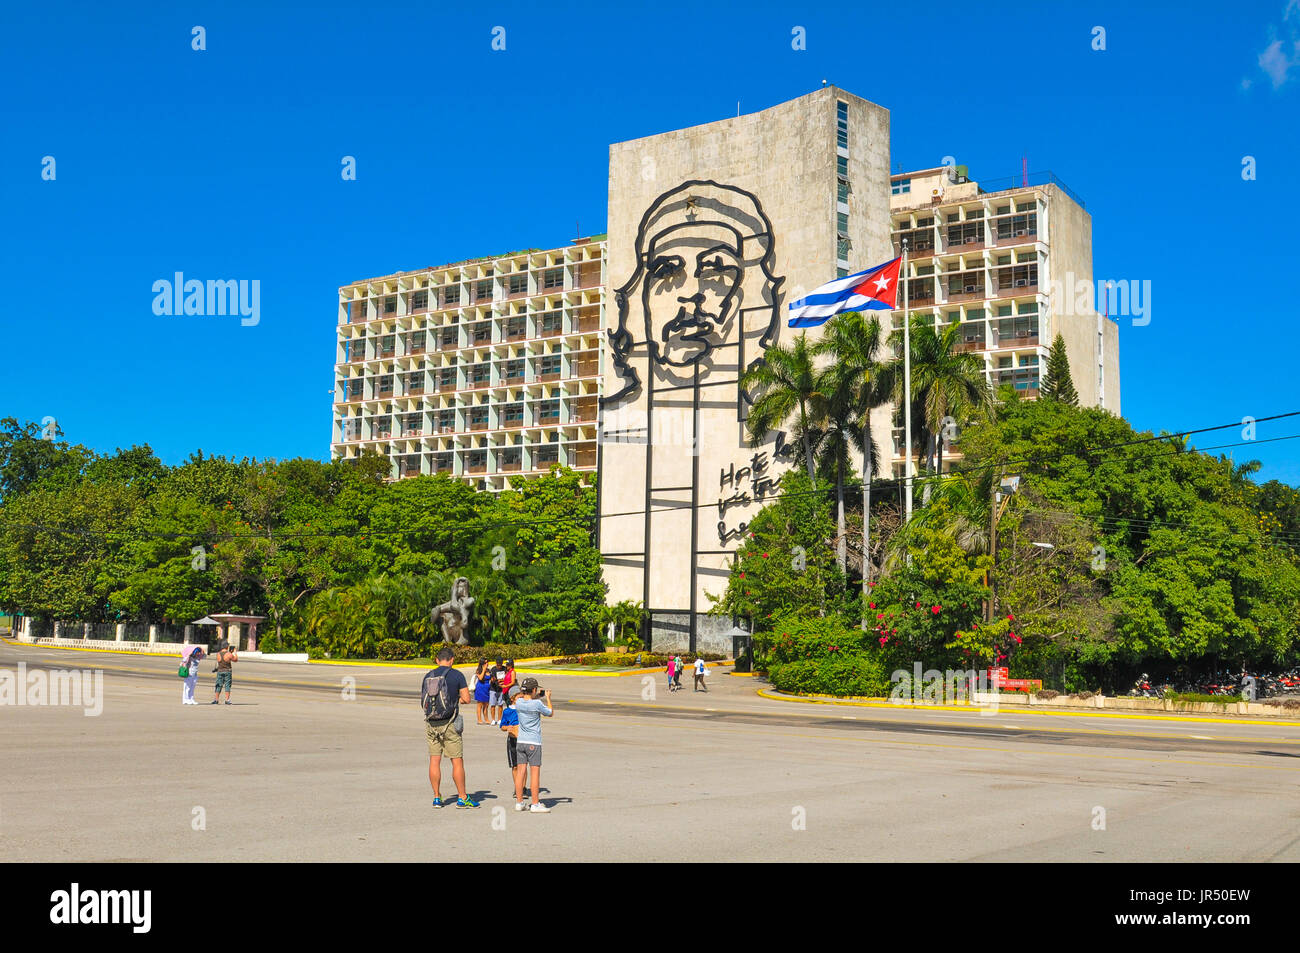 Havana, Cuba - December 19, 2016: View of the National monument of Ernesto Che Guevara at the Plaza de la Revolucion (Square of the Revolution) in Hav Stock Photo